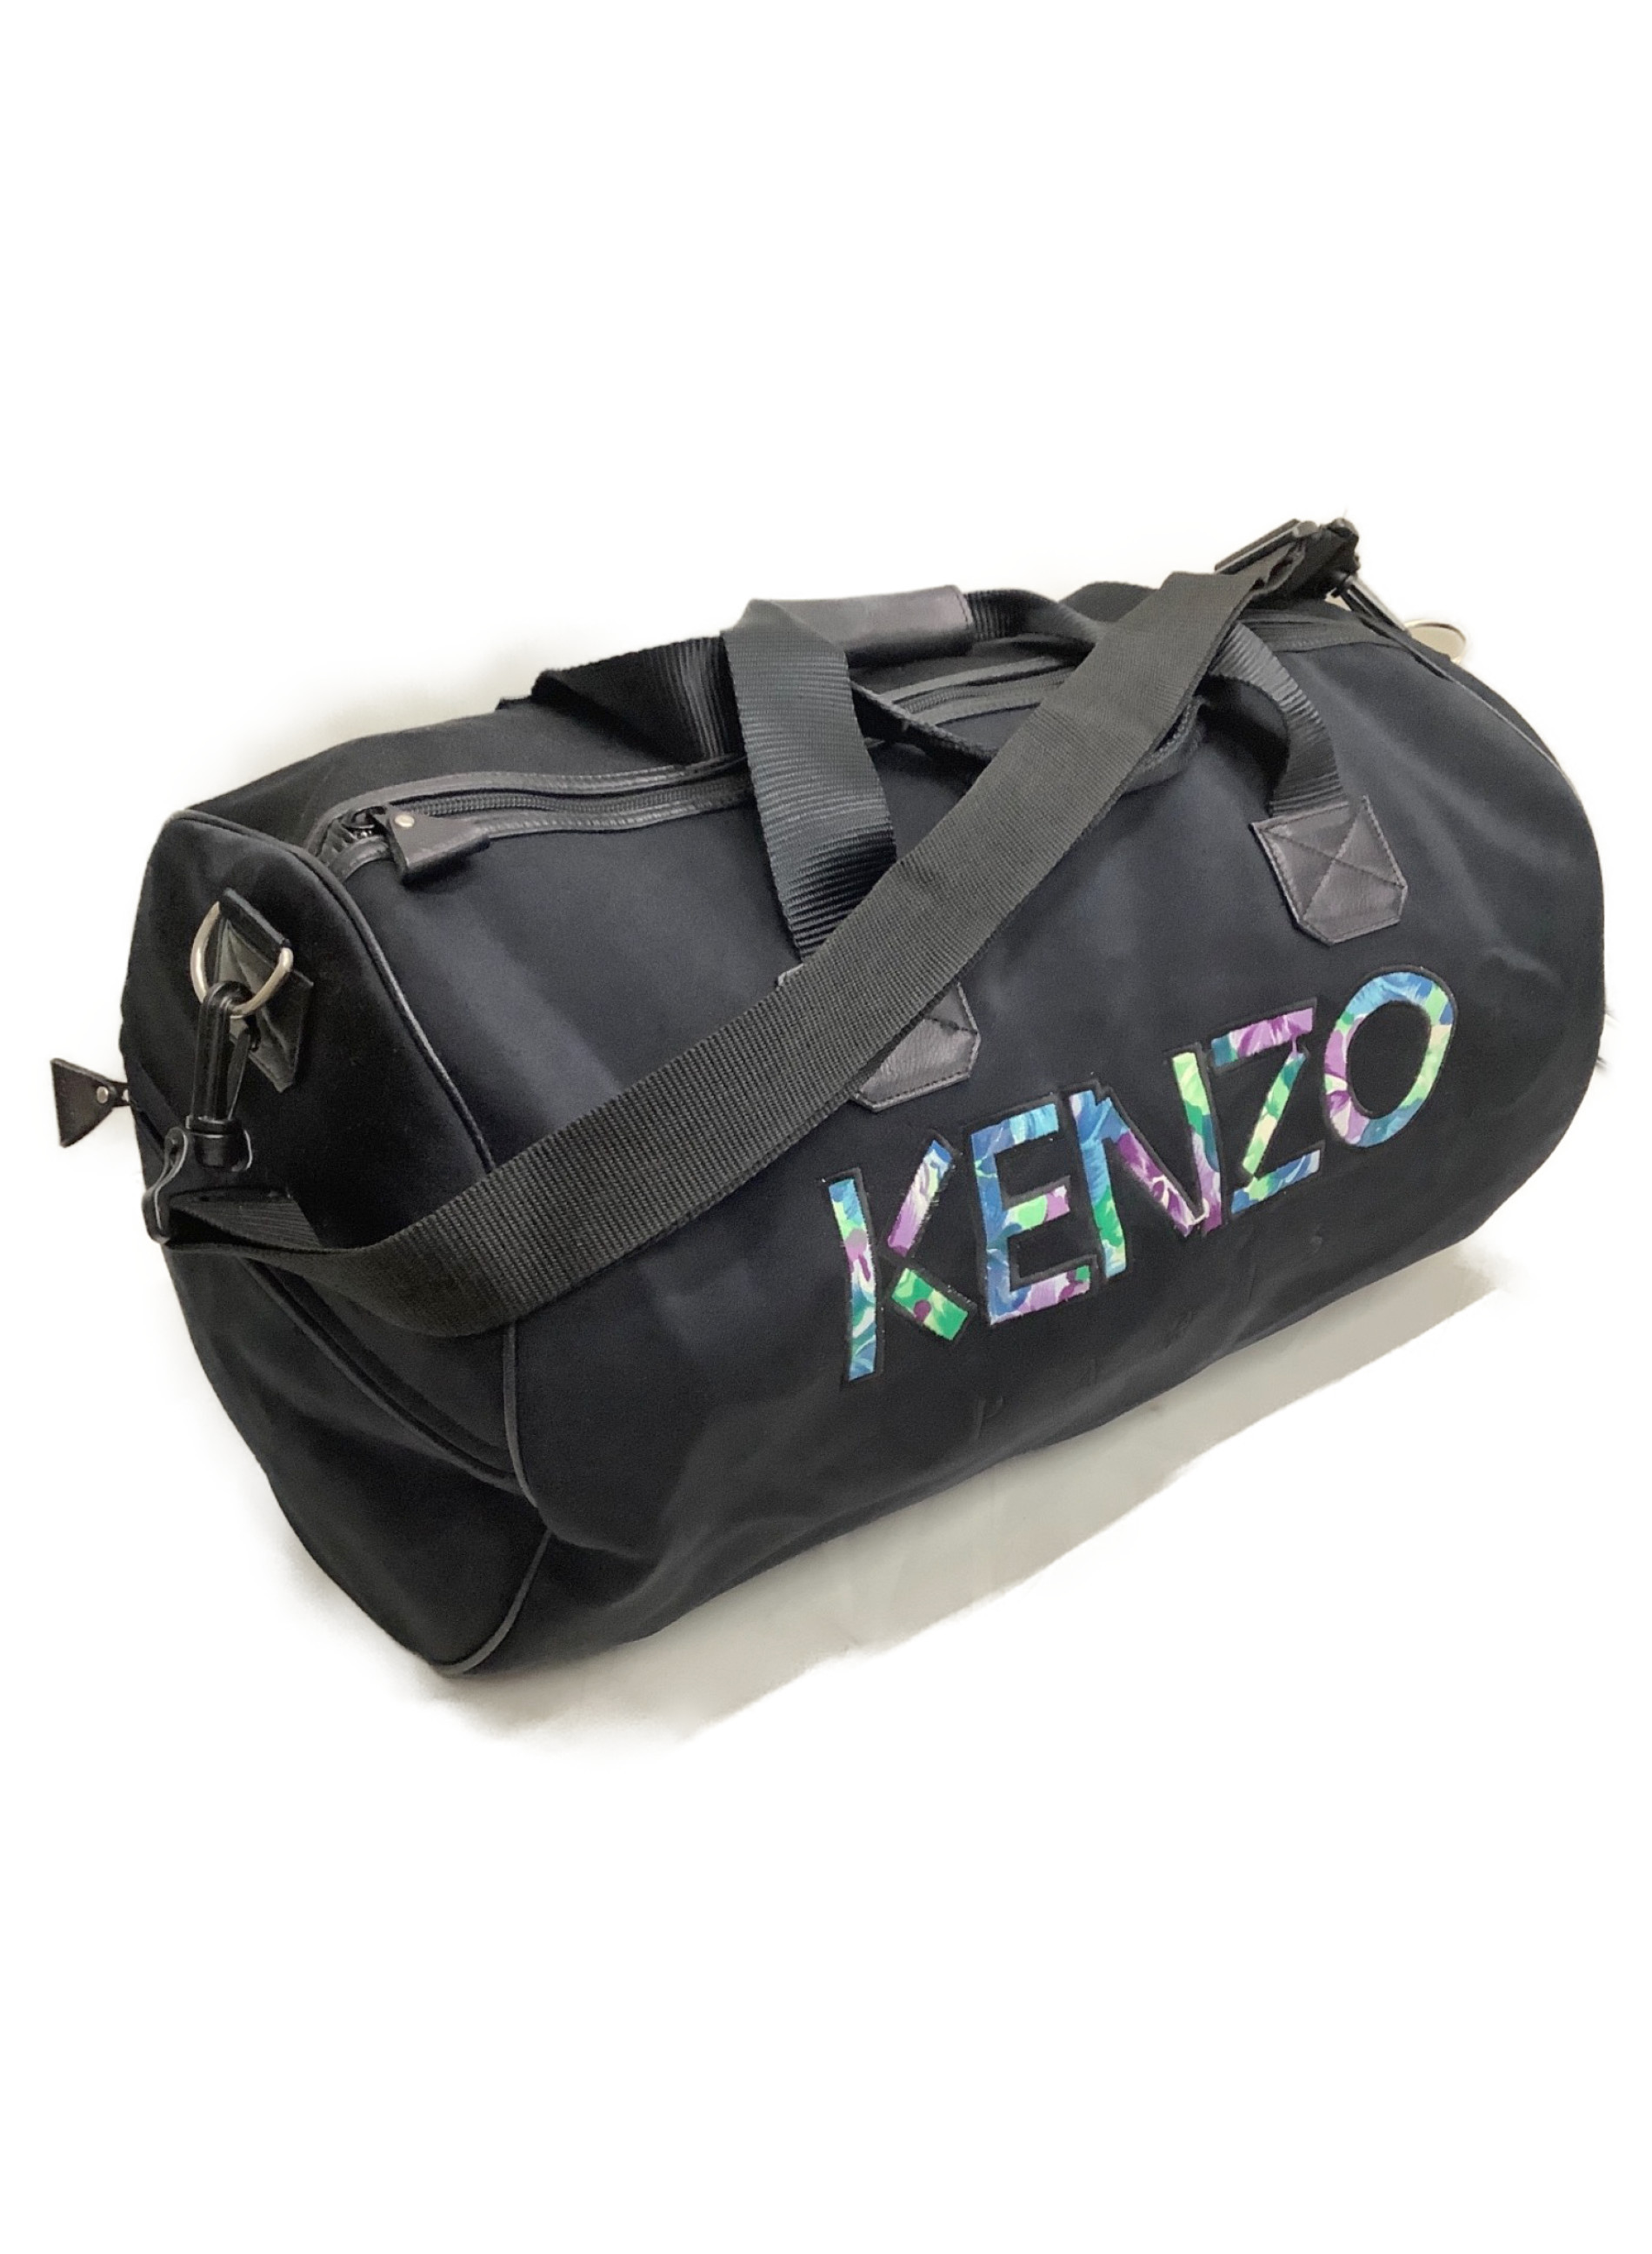 KENZO (ケンゾー) 刺繍ボストンバッグ ブラック